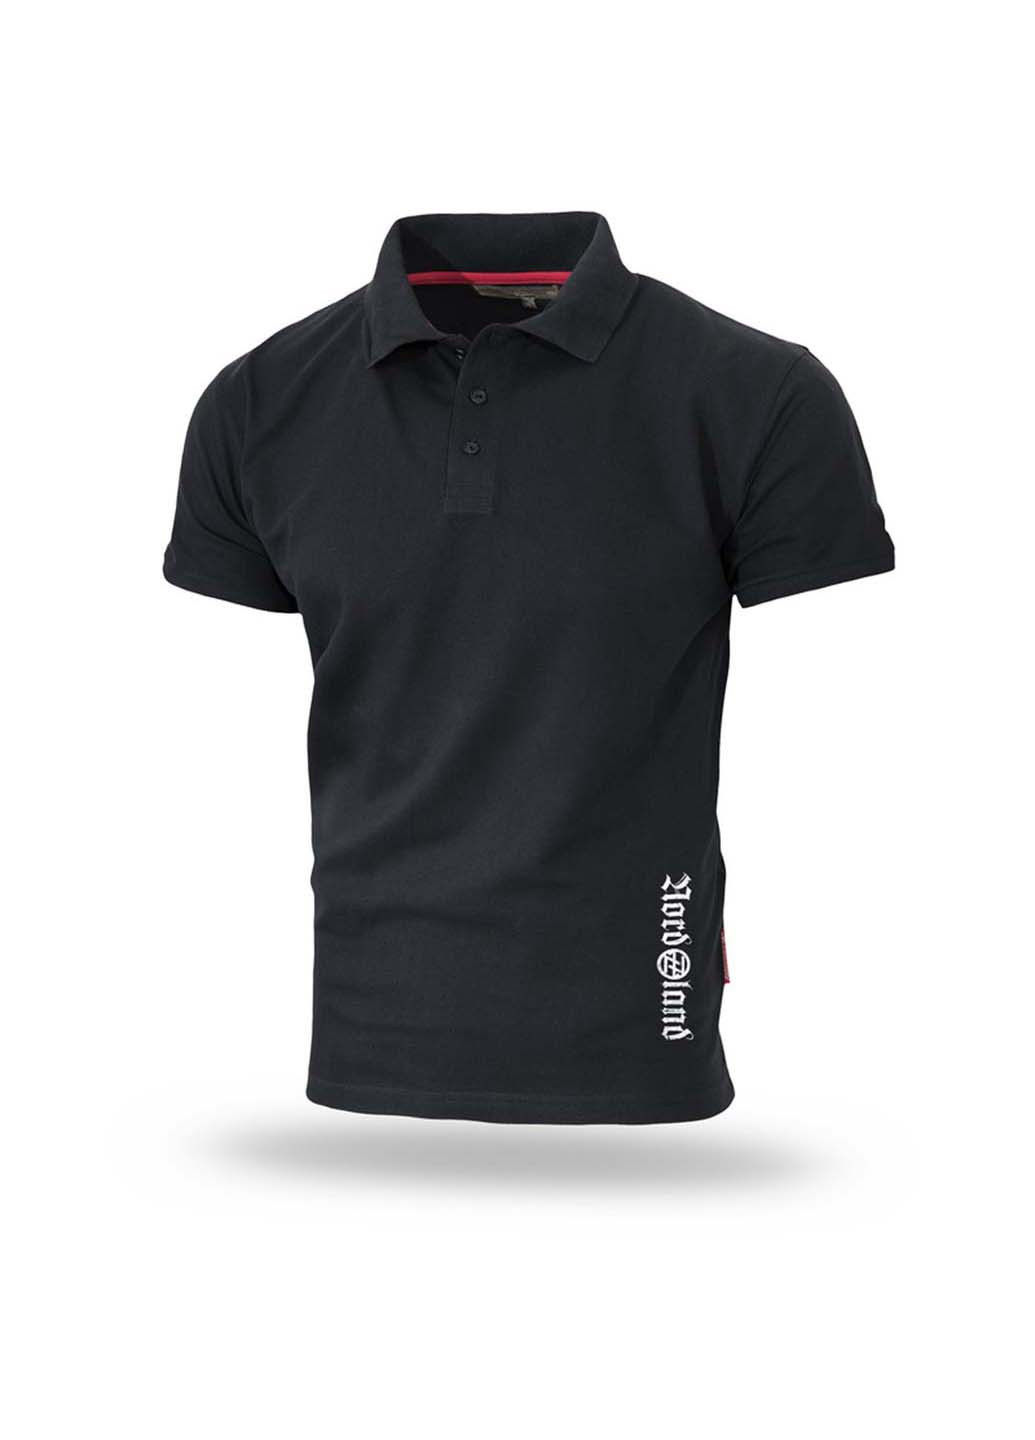 Черная футболка-футболка поло nortland для мужчин Dobermans Aggressive